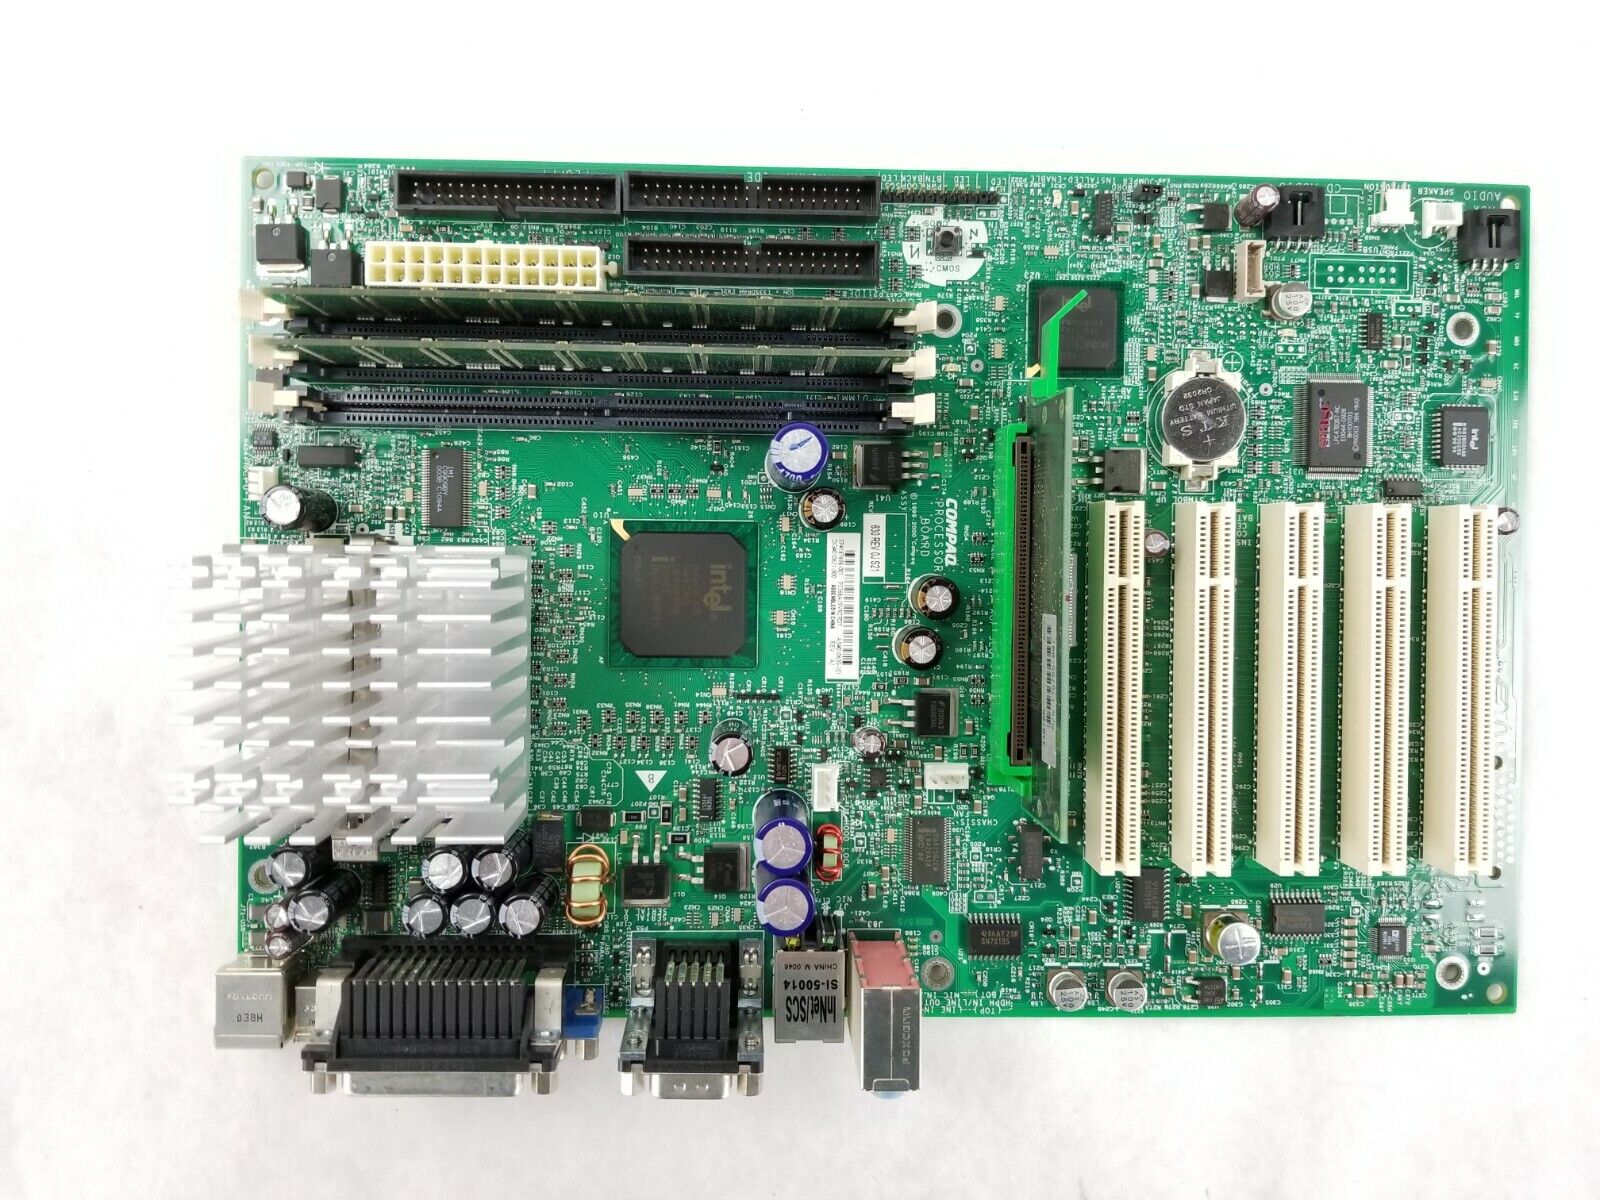 Compaq DeskPro Motherboard Intel Pentium III 733MHz 512MB RAM 187498-001